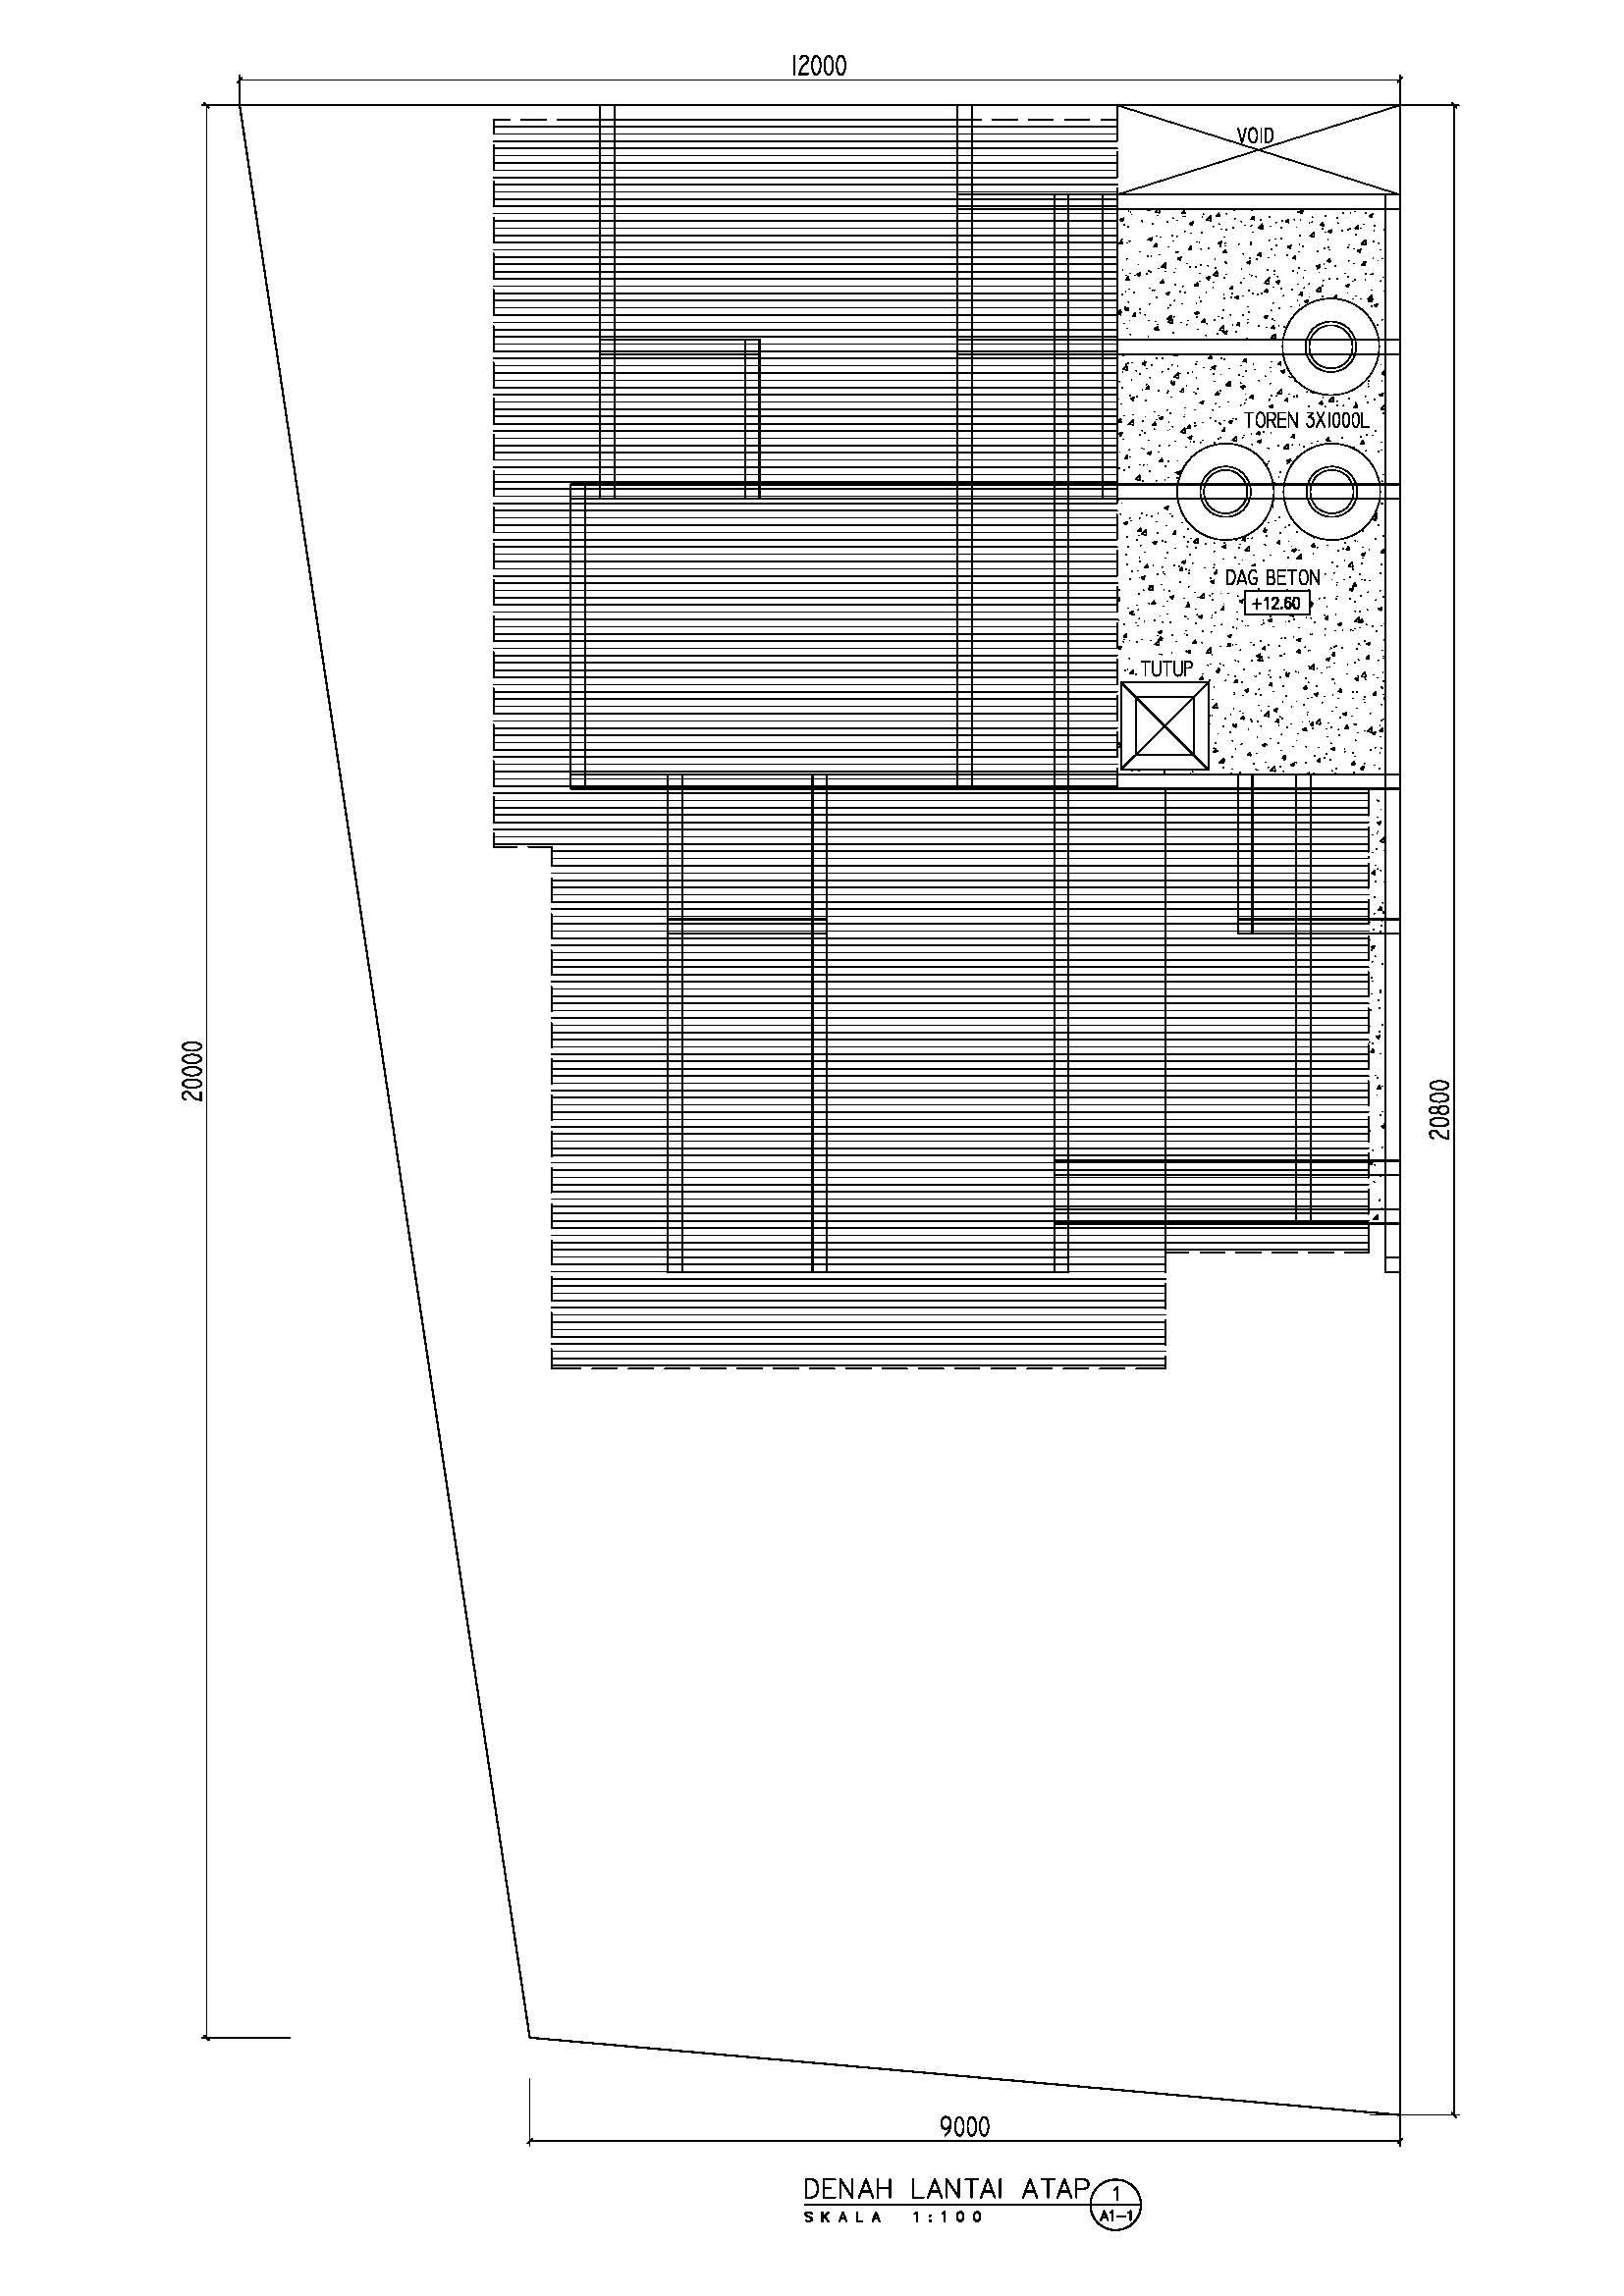 Desain rumah kos minimalis 3 lantai di jl baung lenteng 